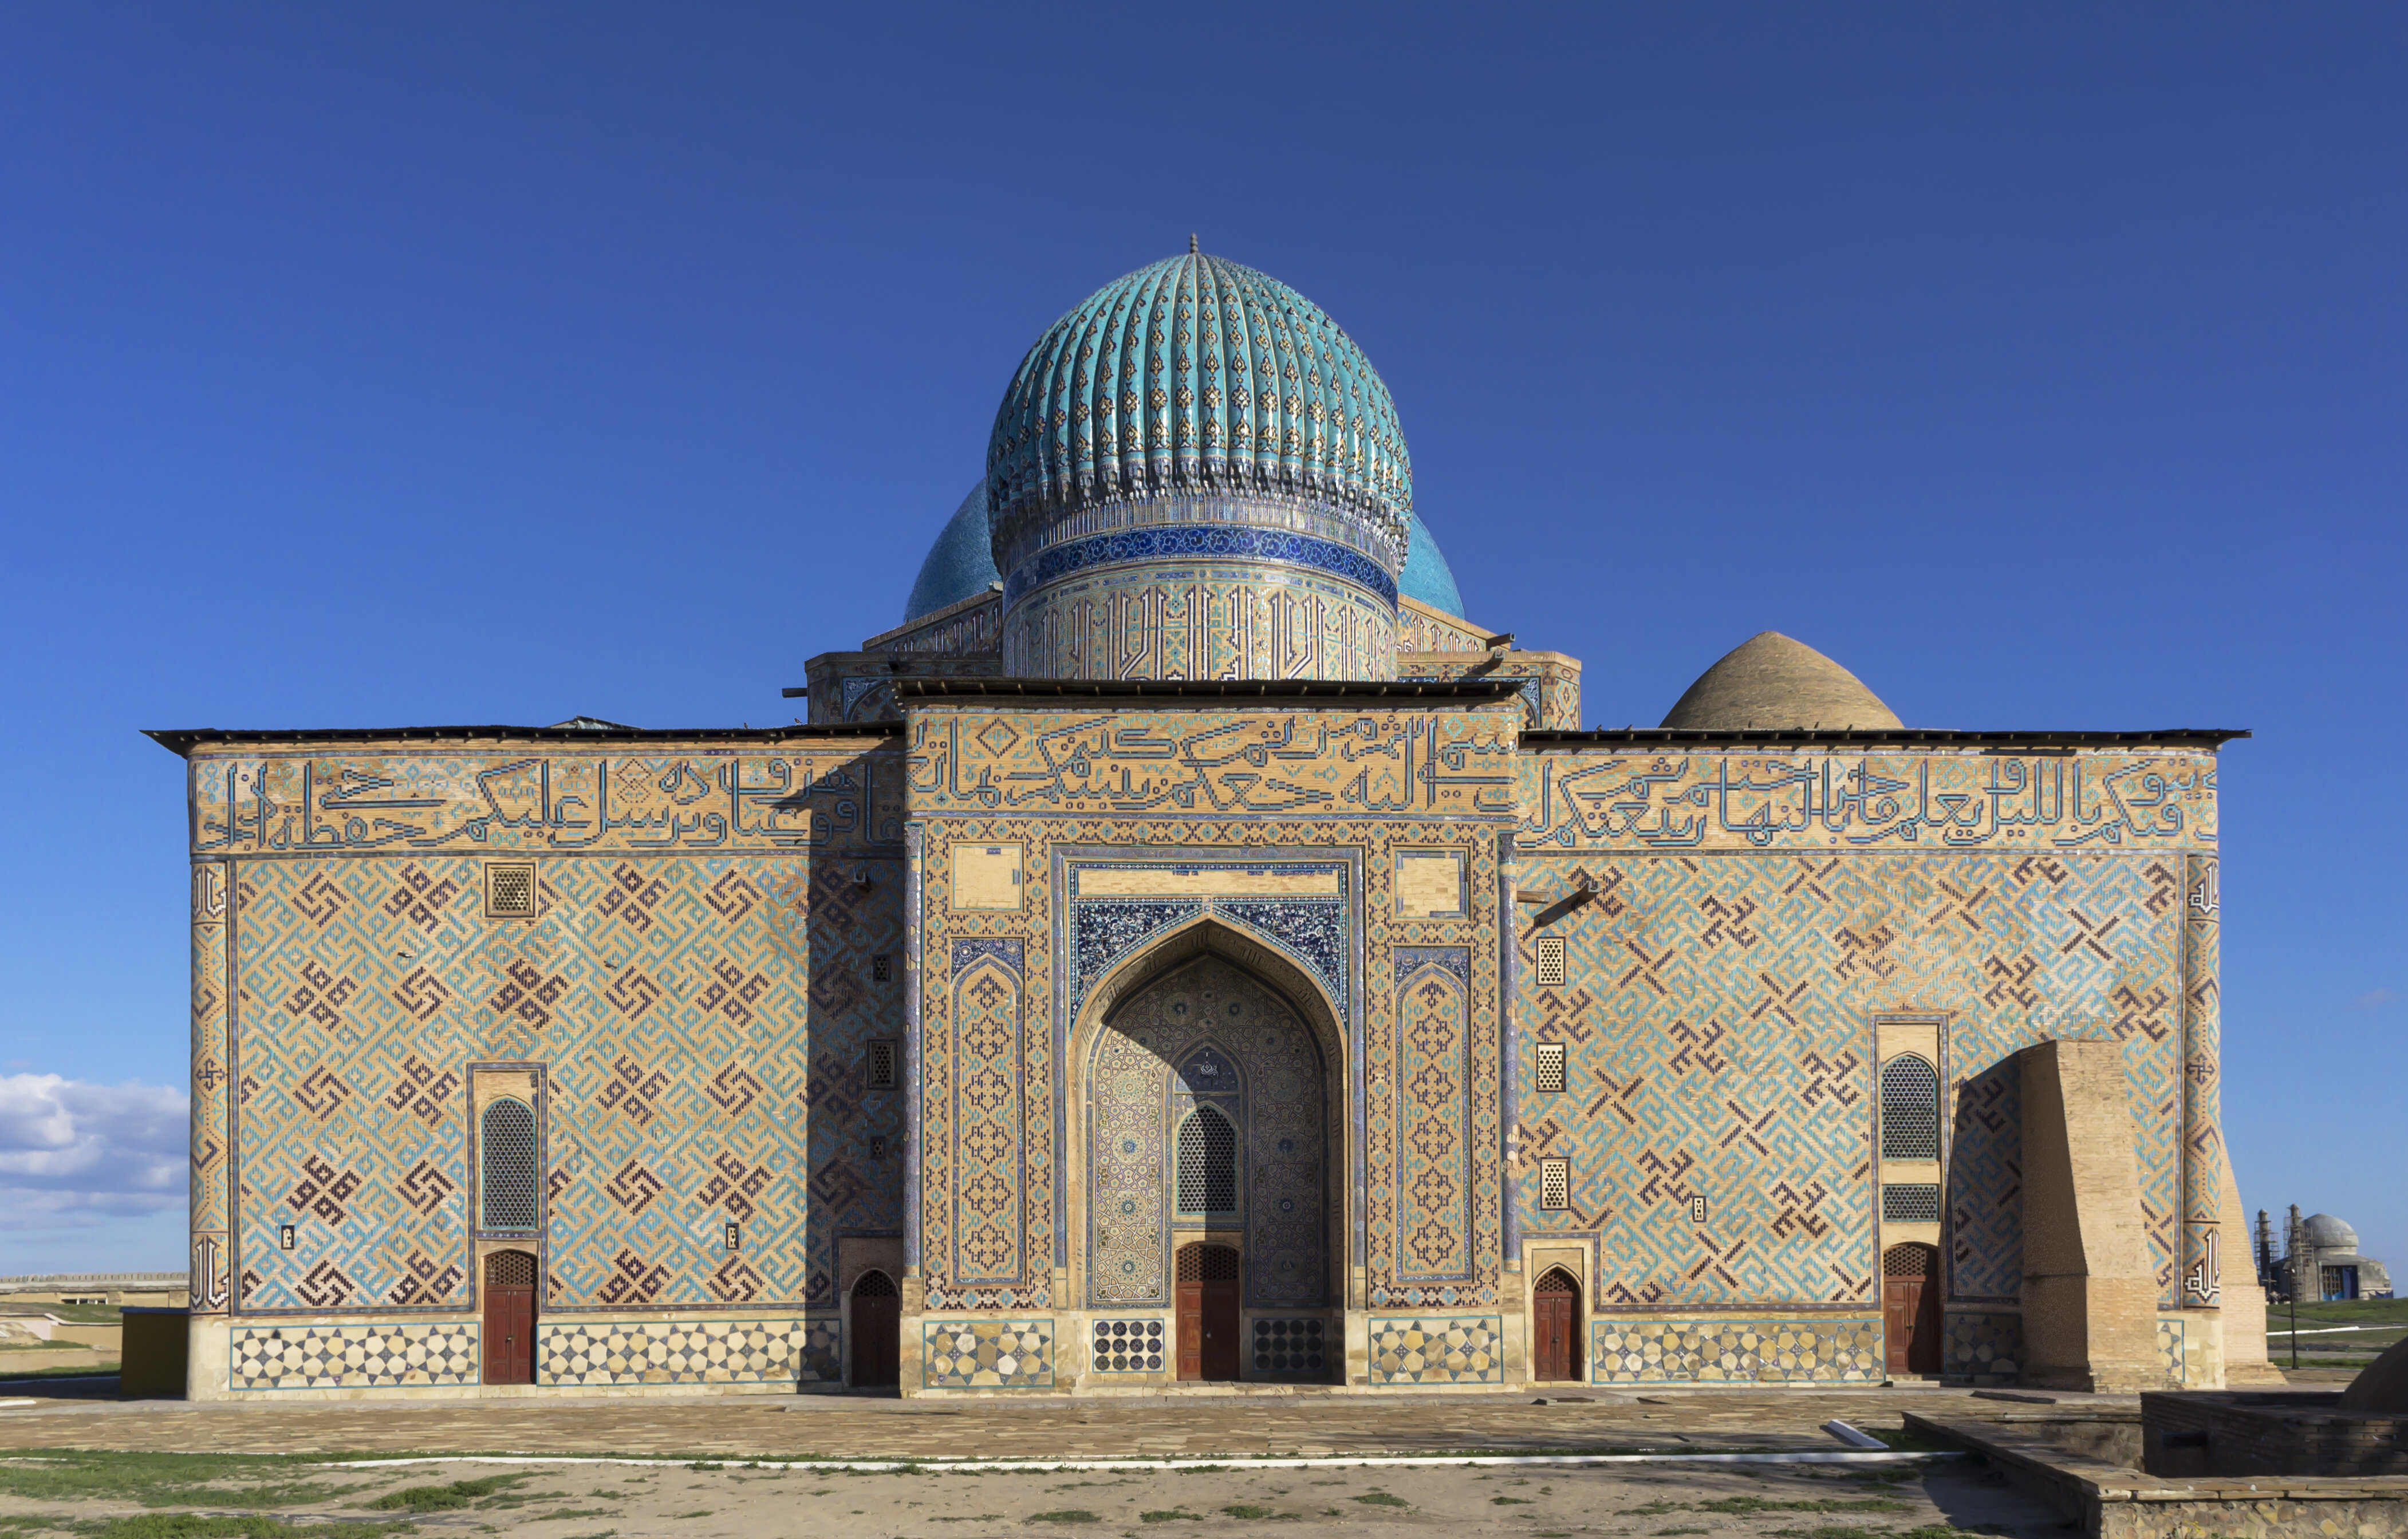 Mausoleum_of_Khoja_Ahmed_Yasawi_in_Hazrat-e_Turkestan,_Kazakhstan.jpg (6.05 MB)